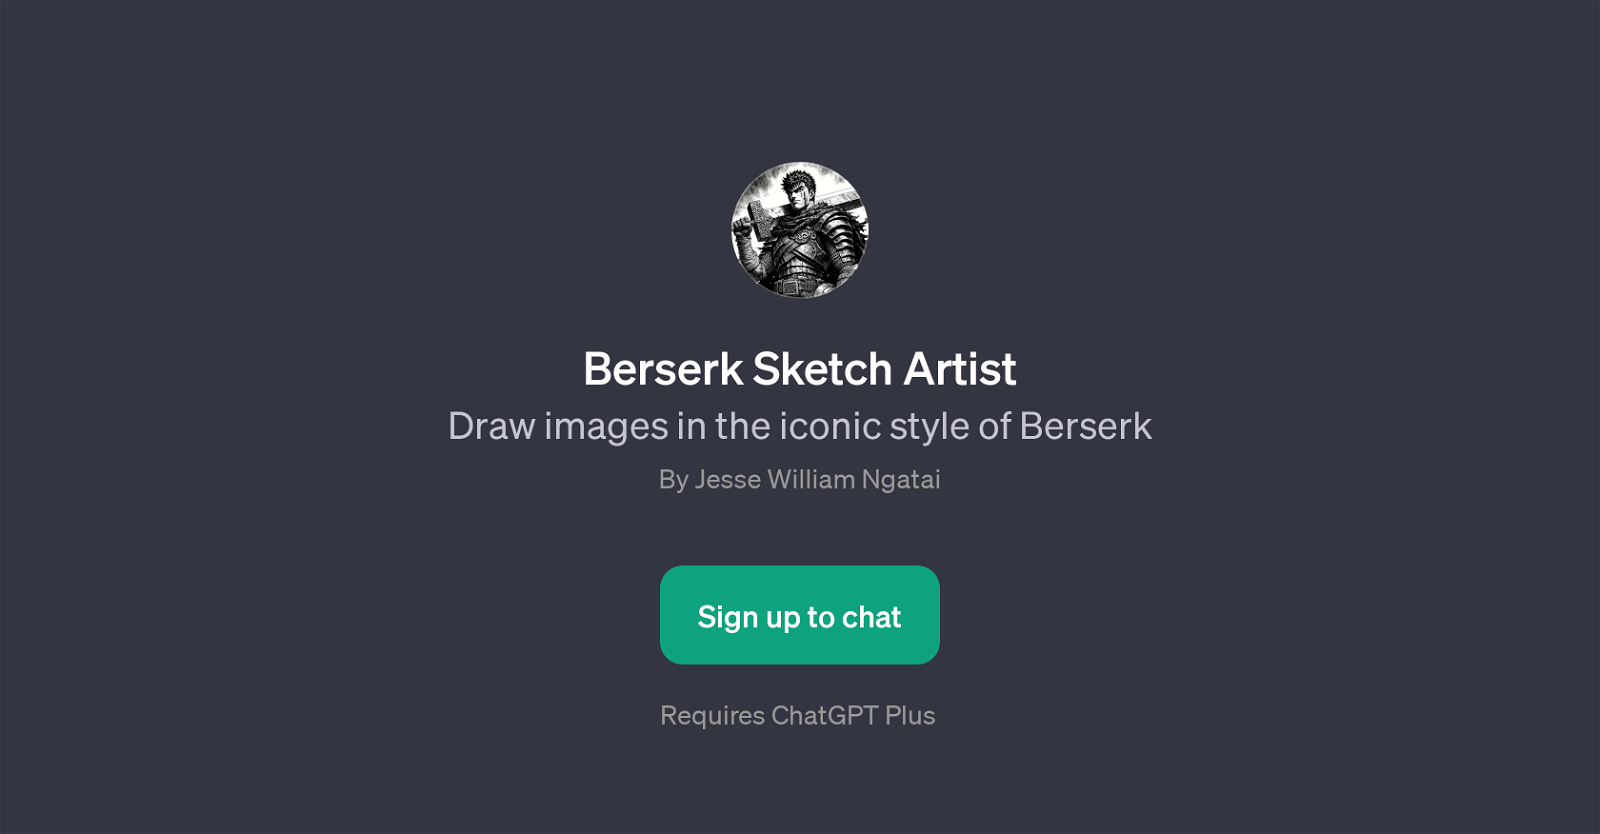 Berserk Sketch Artist website